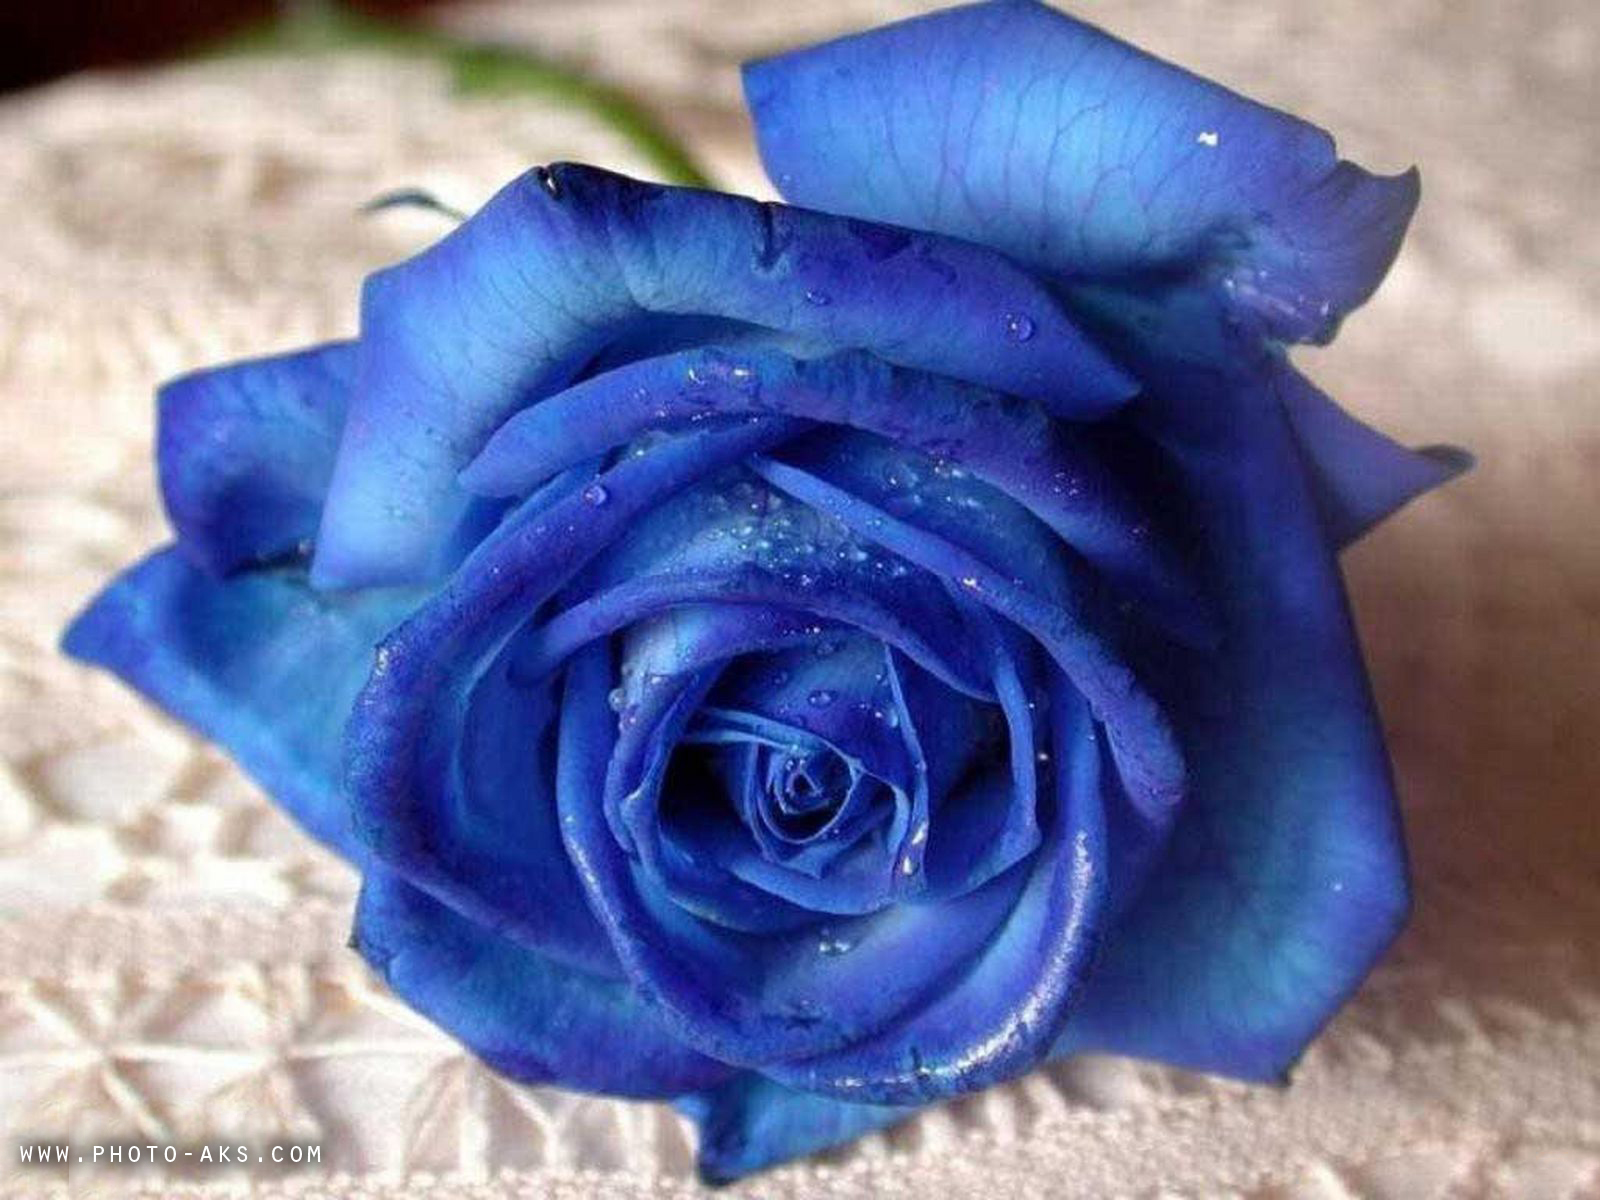 عکس گلهای آبی